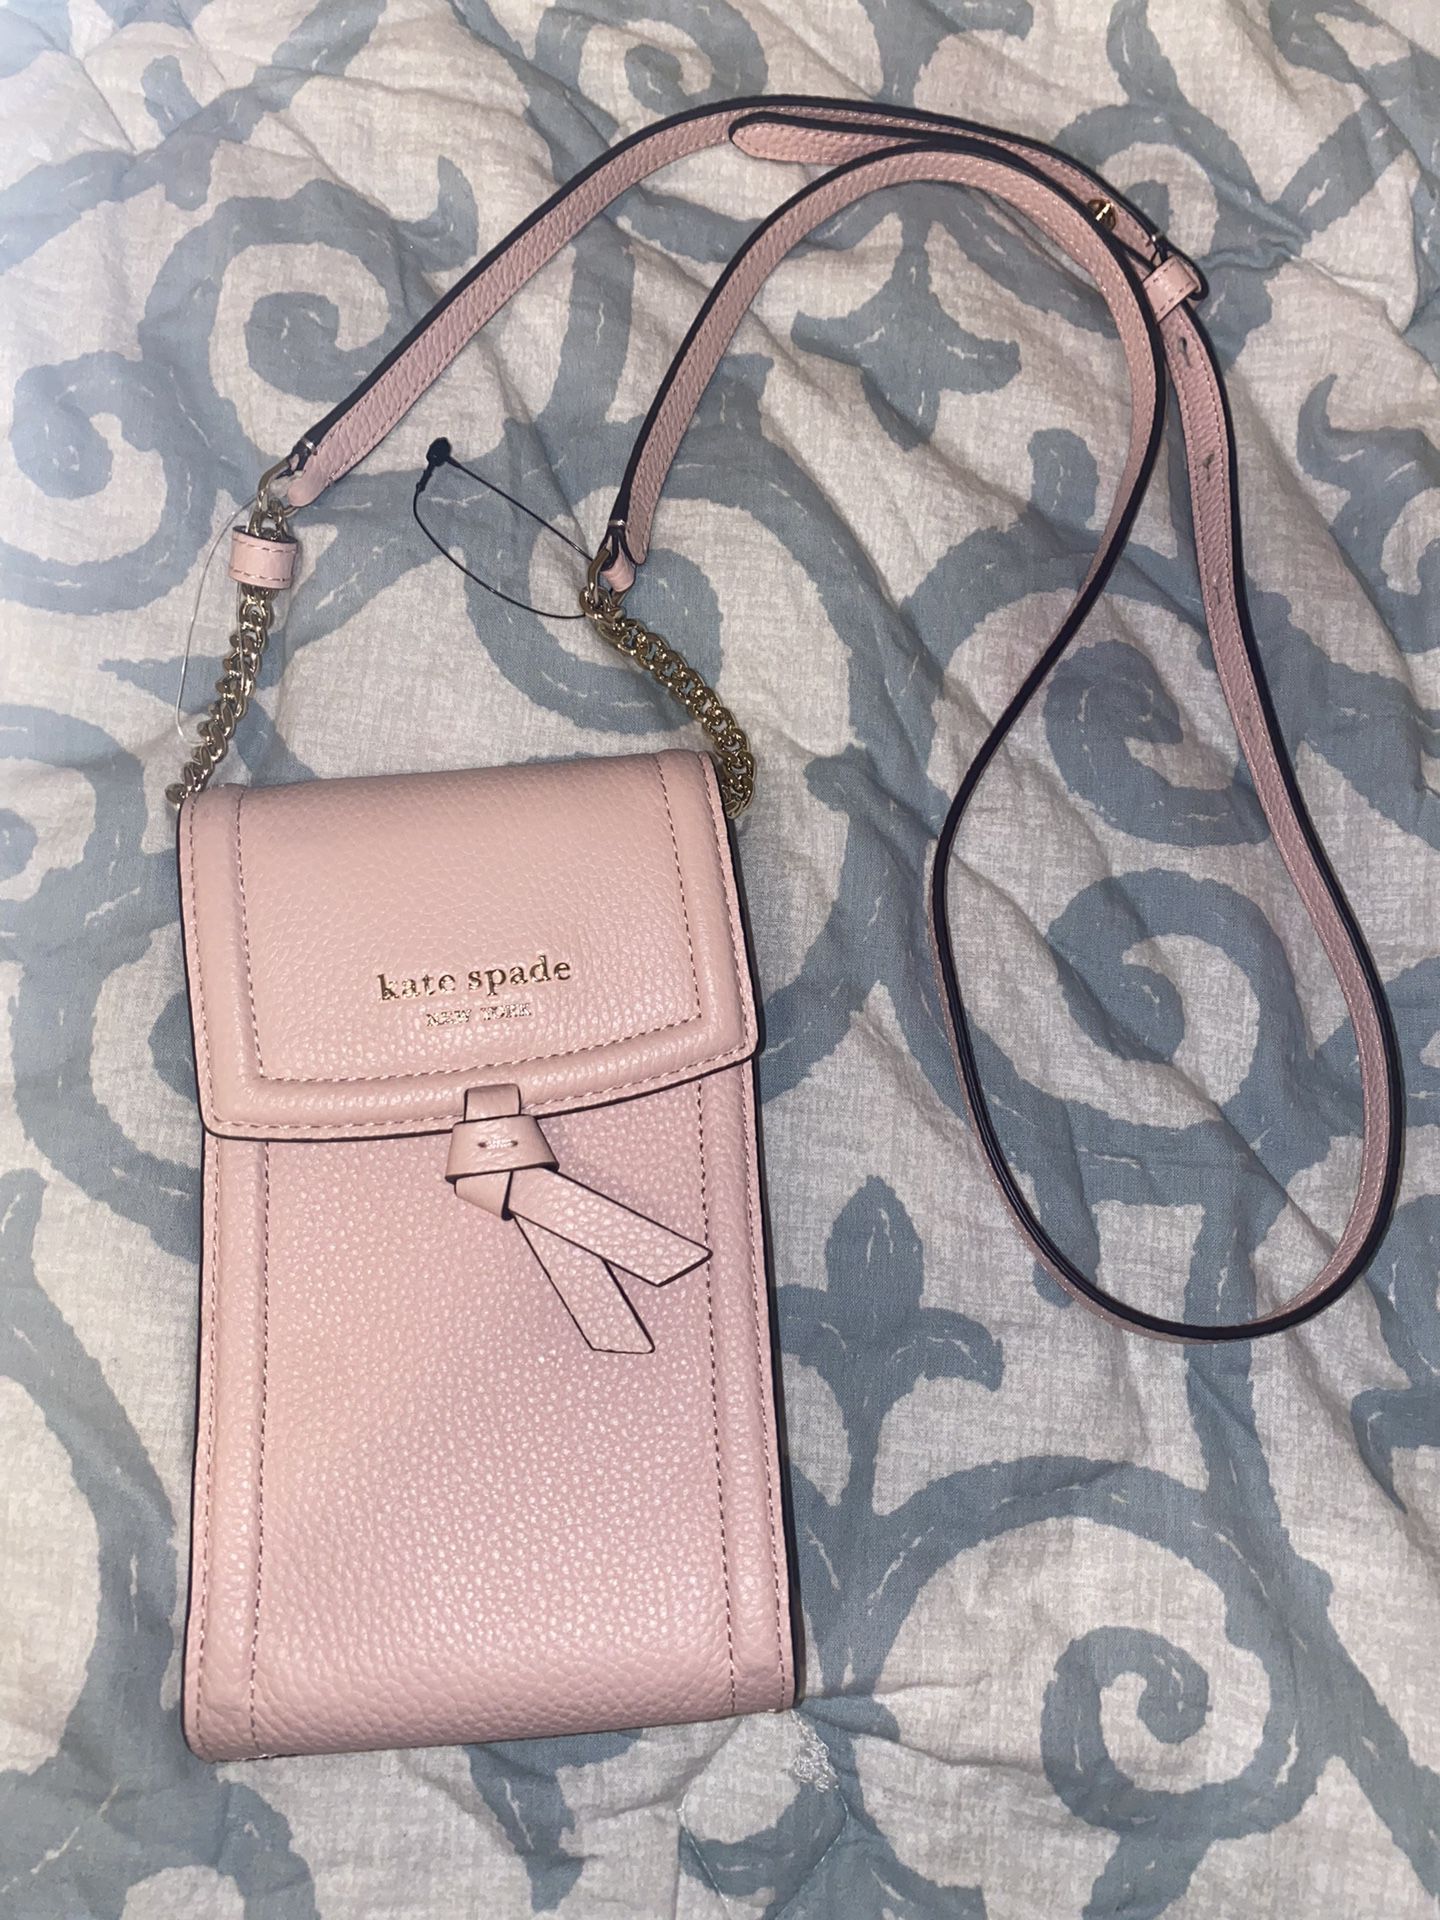 Kate Spade Phone Wallet Bag New